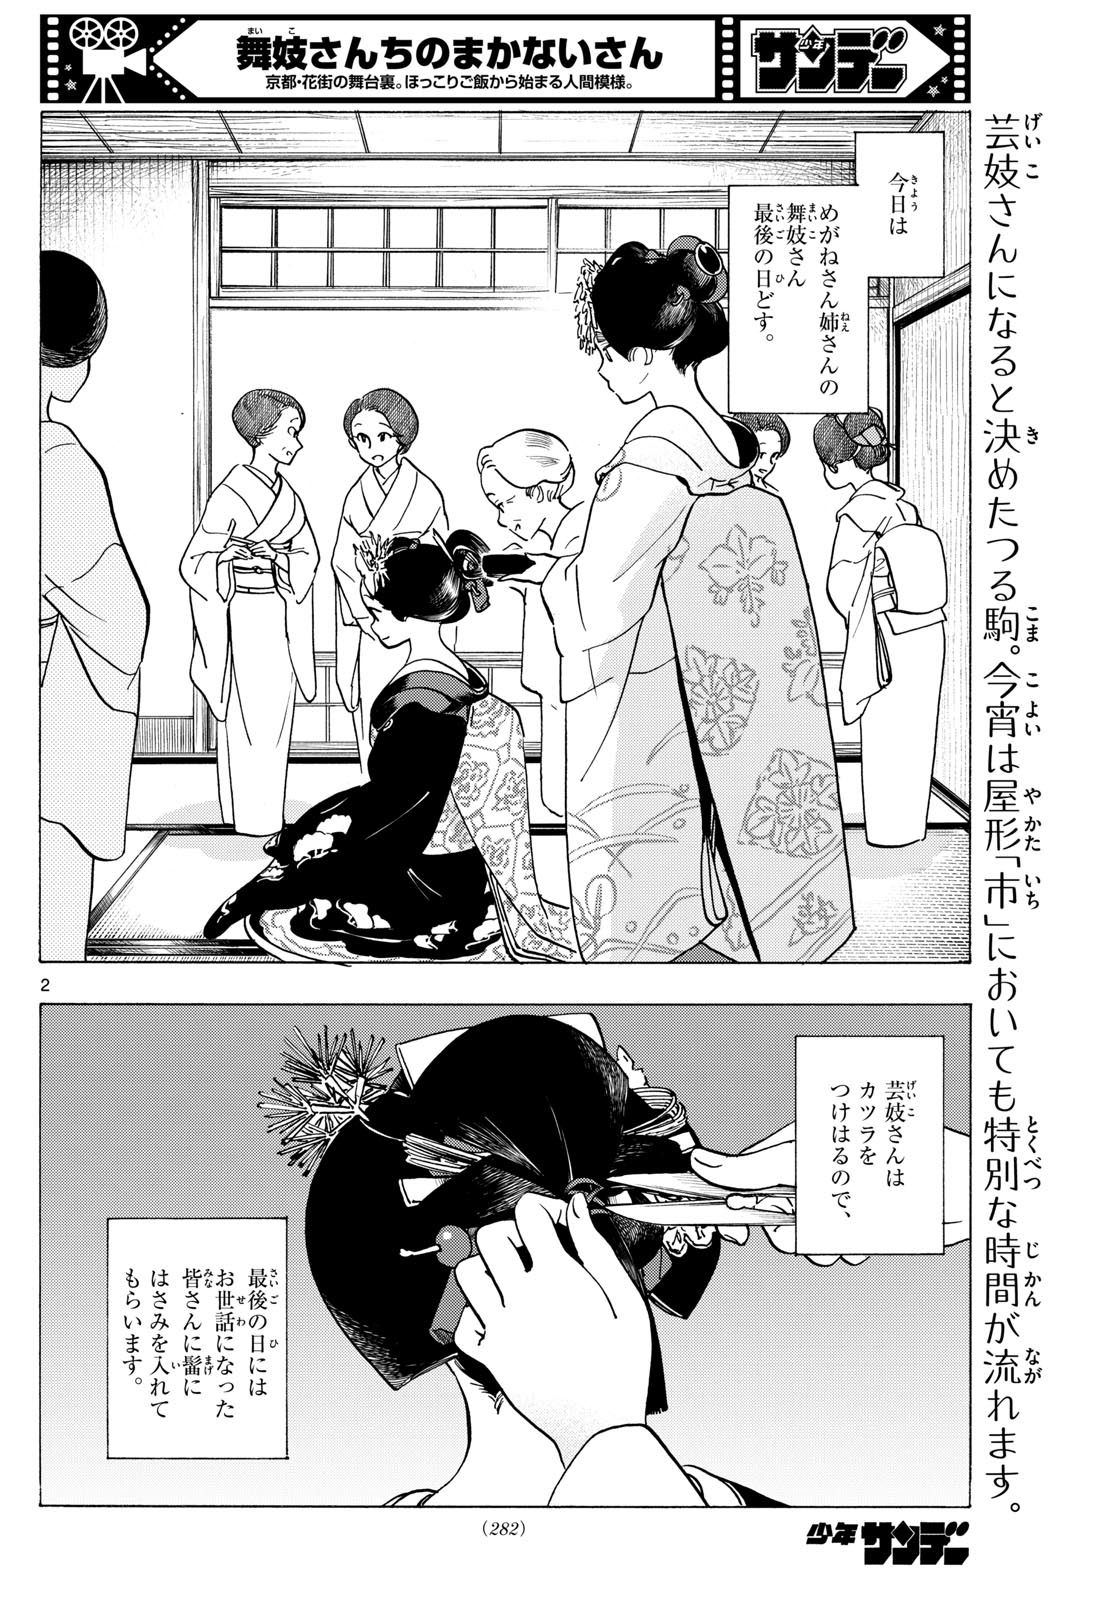 Maiko-san Chi no Makanai-san - Chapter 293 - Page 2